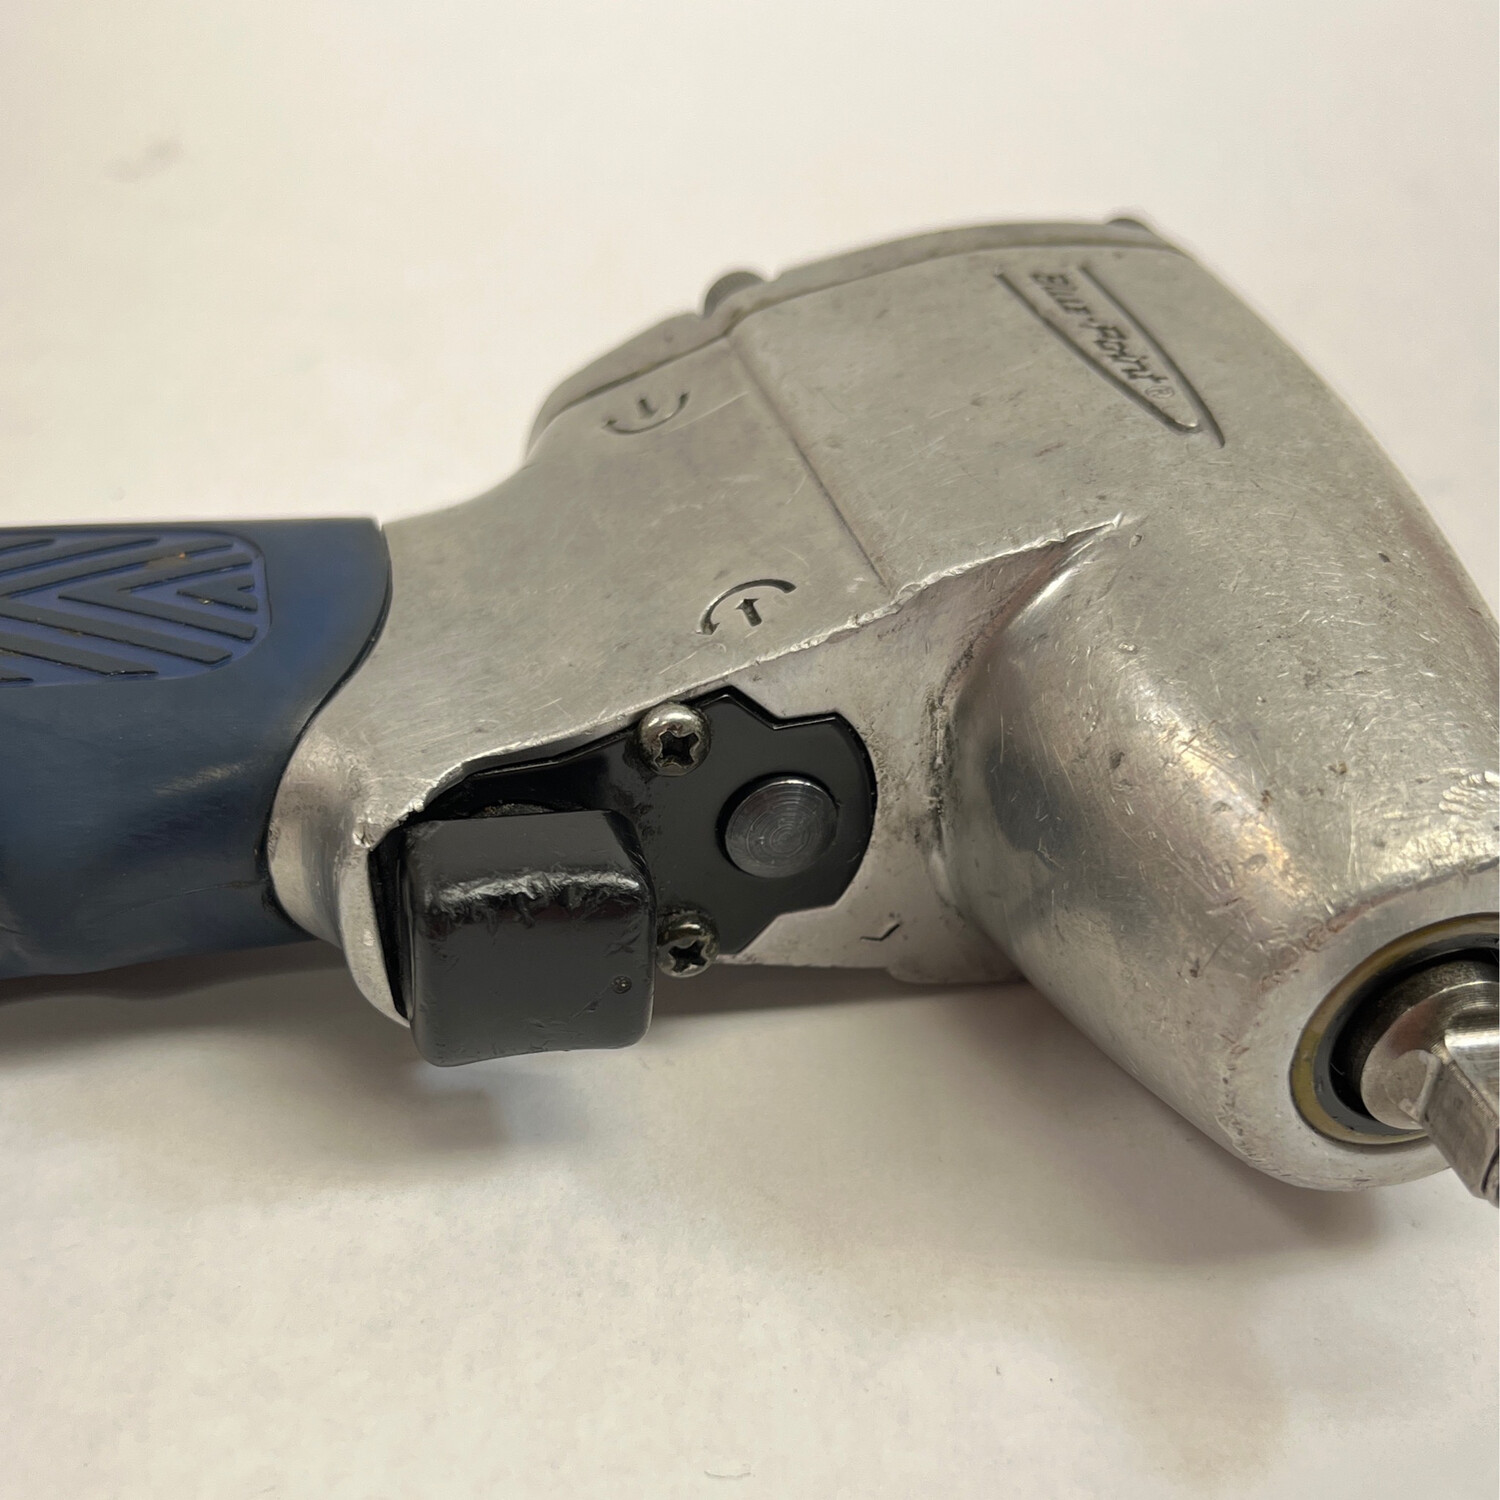 Blue Point 1/4” Drive Pneumatic Mini Air Impact Wrench, AT225B